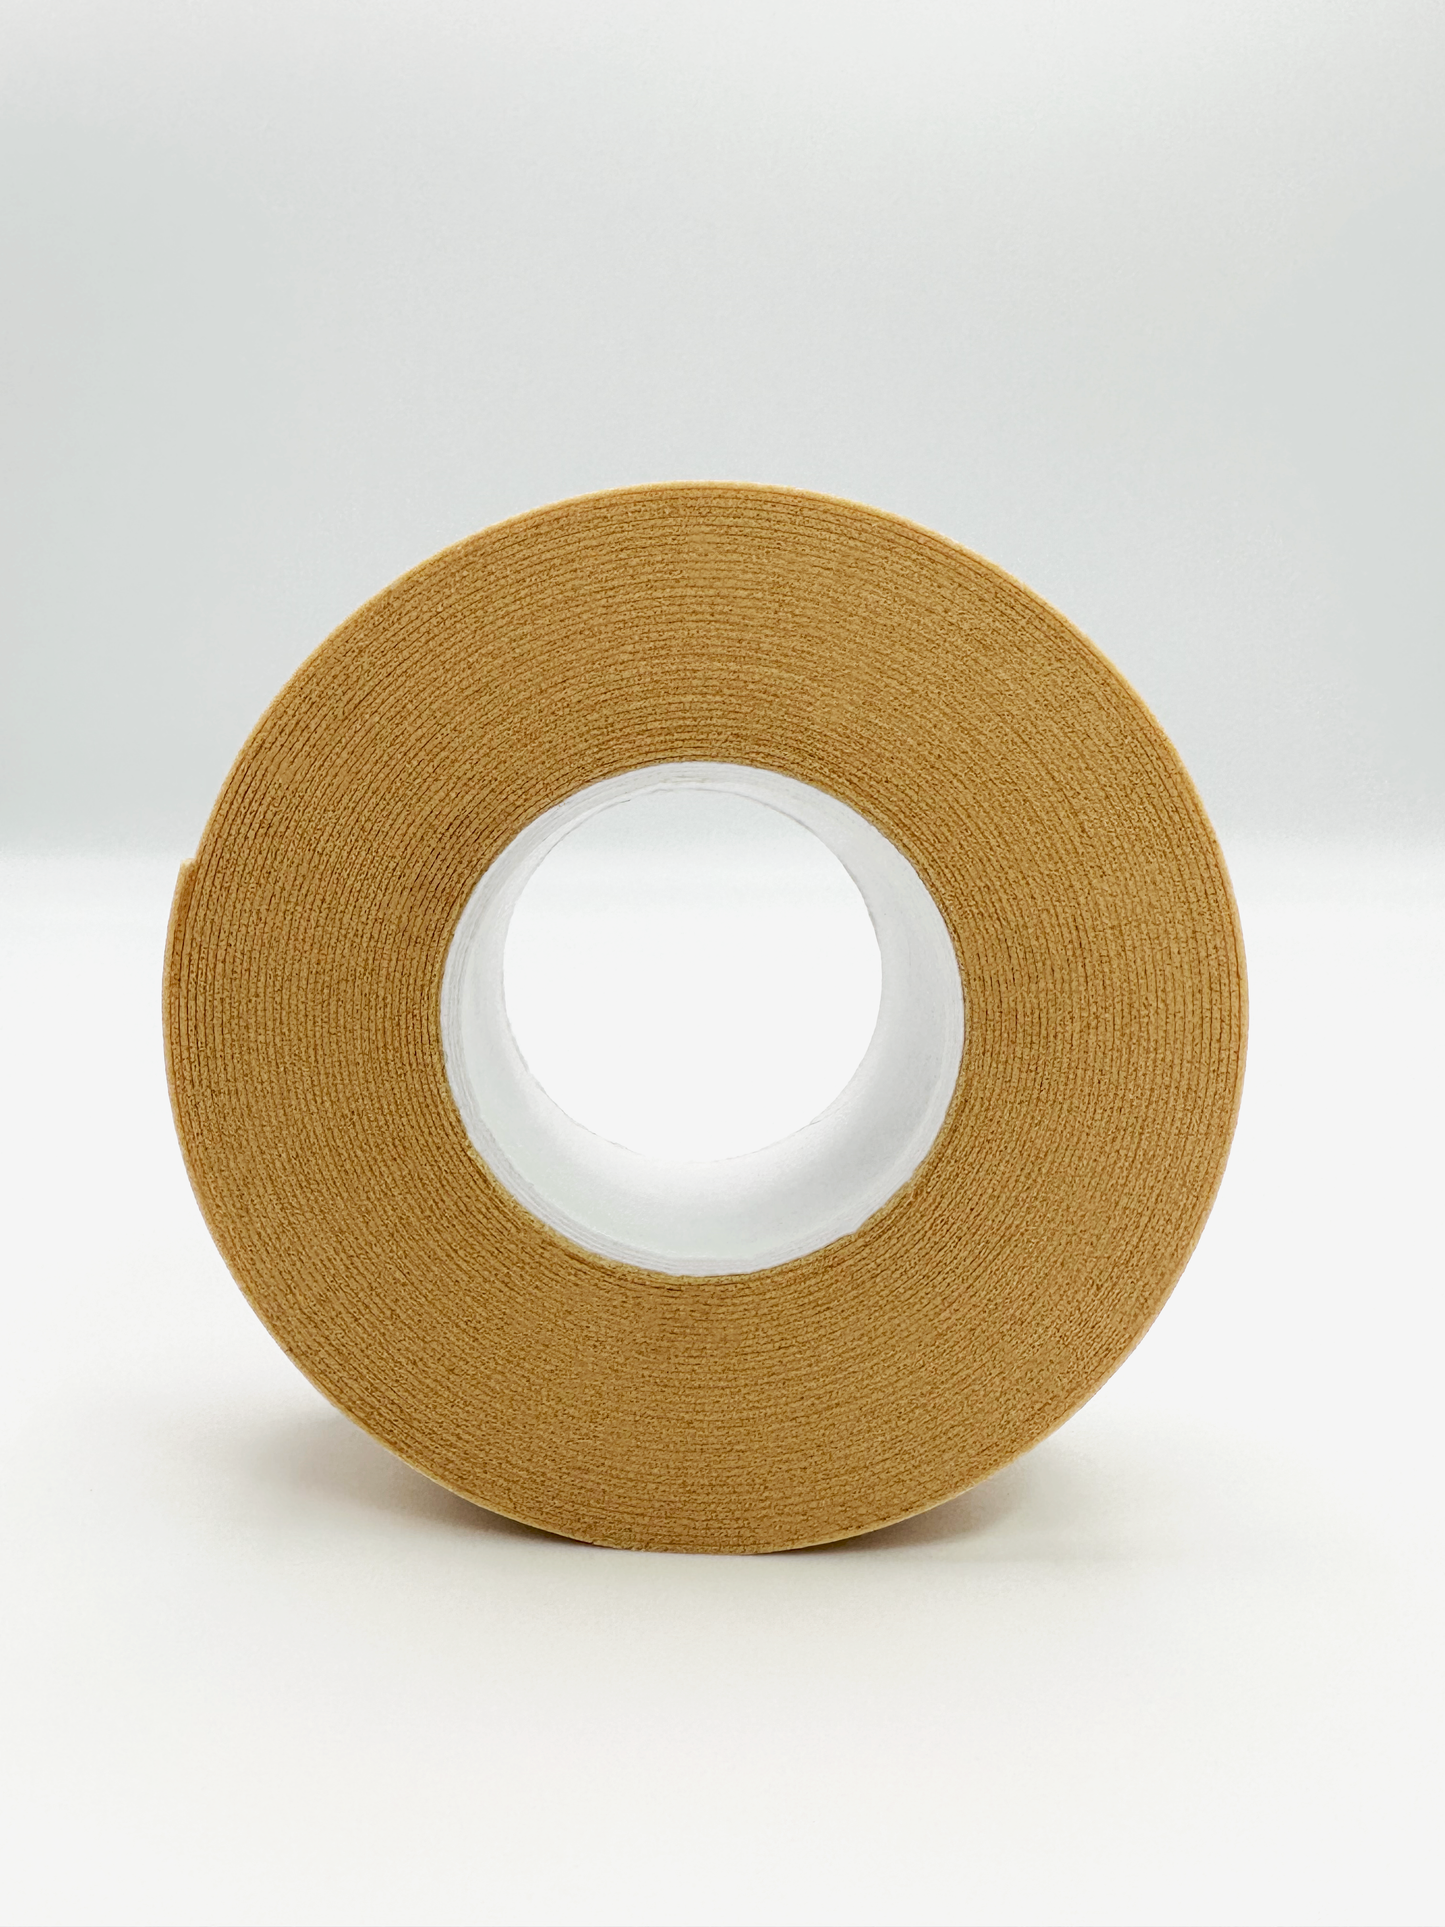 Foam Lash Tape - Breathable & Hypoallergenic Tape for Secure Lash Bonding